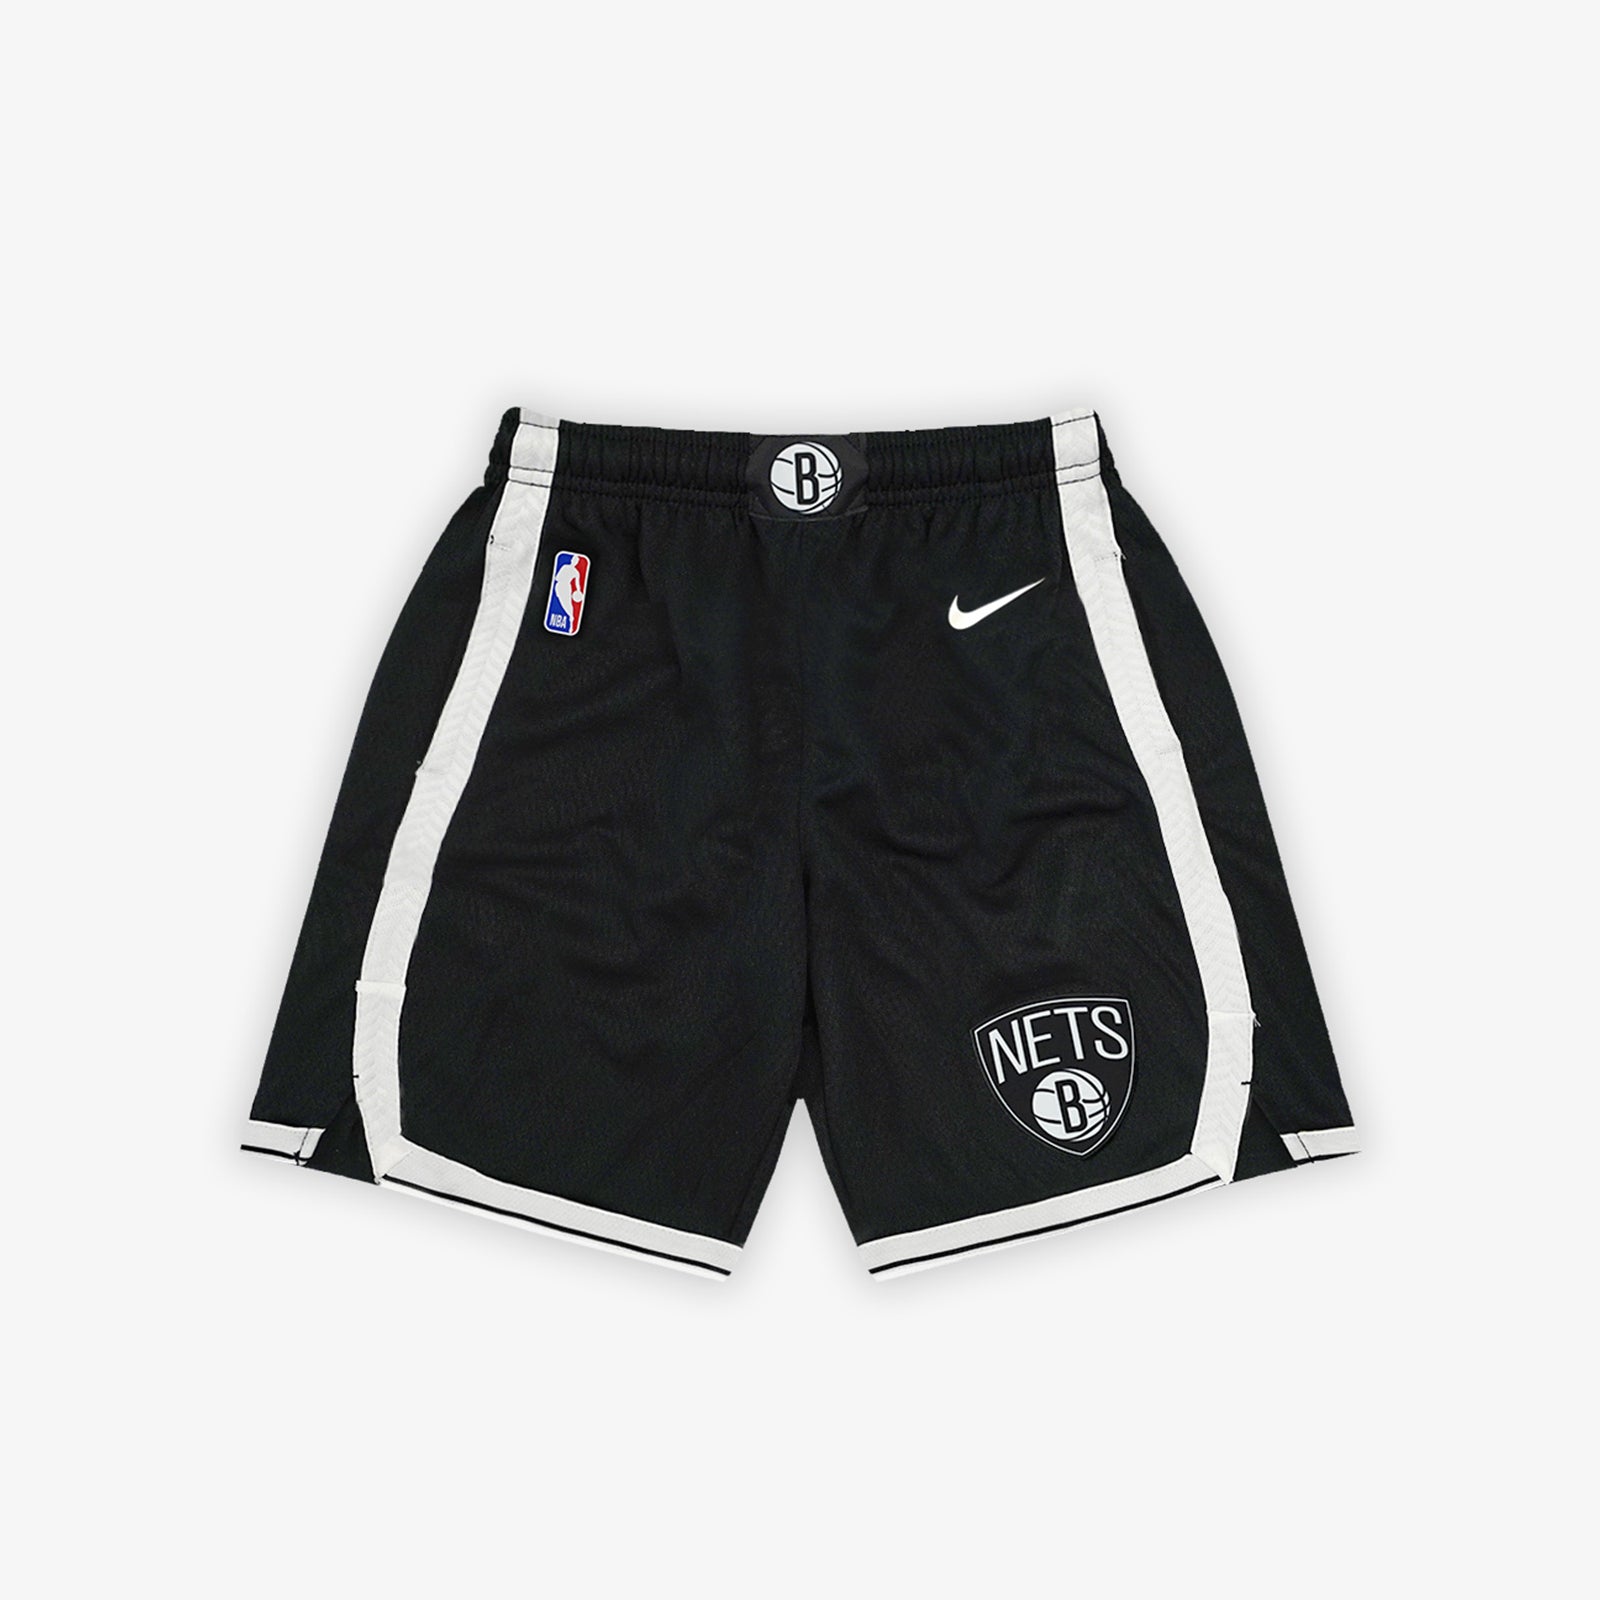 Nike Brooklyn Nets Spotlight Men's Nike Dri-FIT NBA Pullover Hoodie. Nike.com